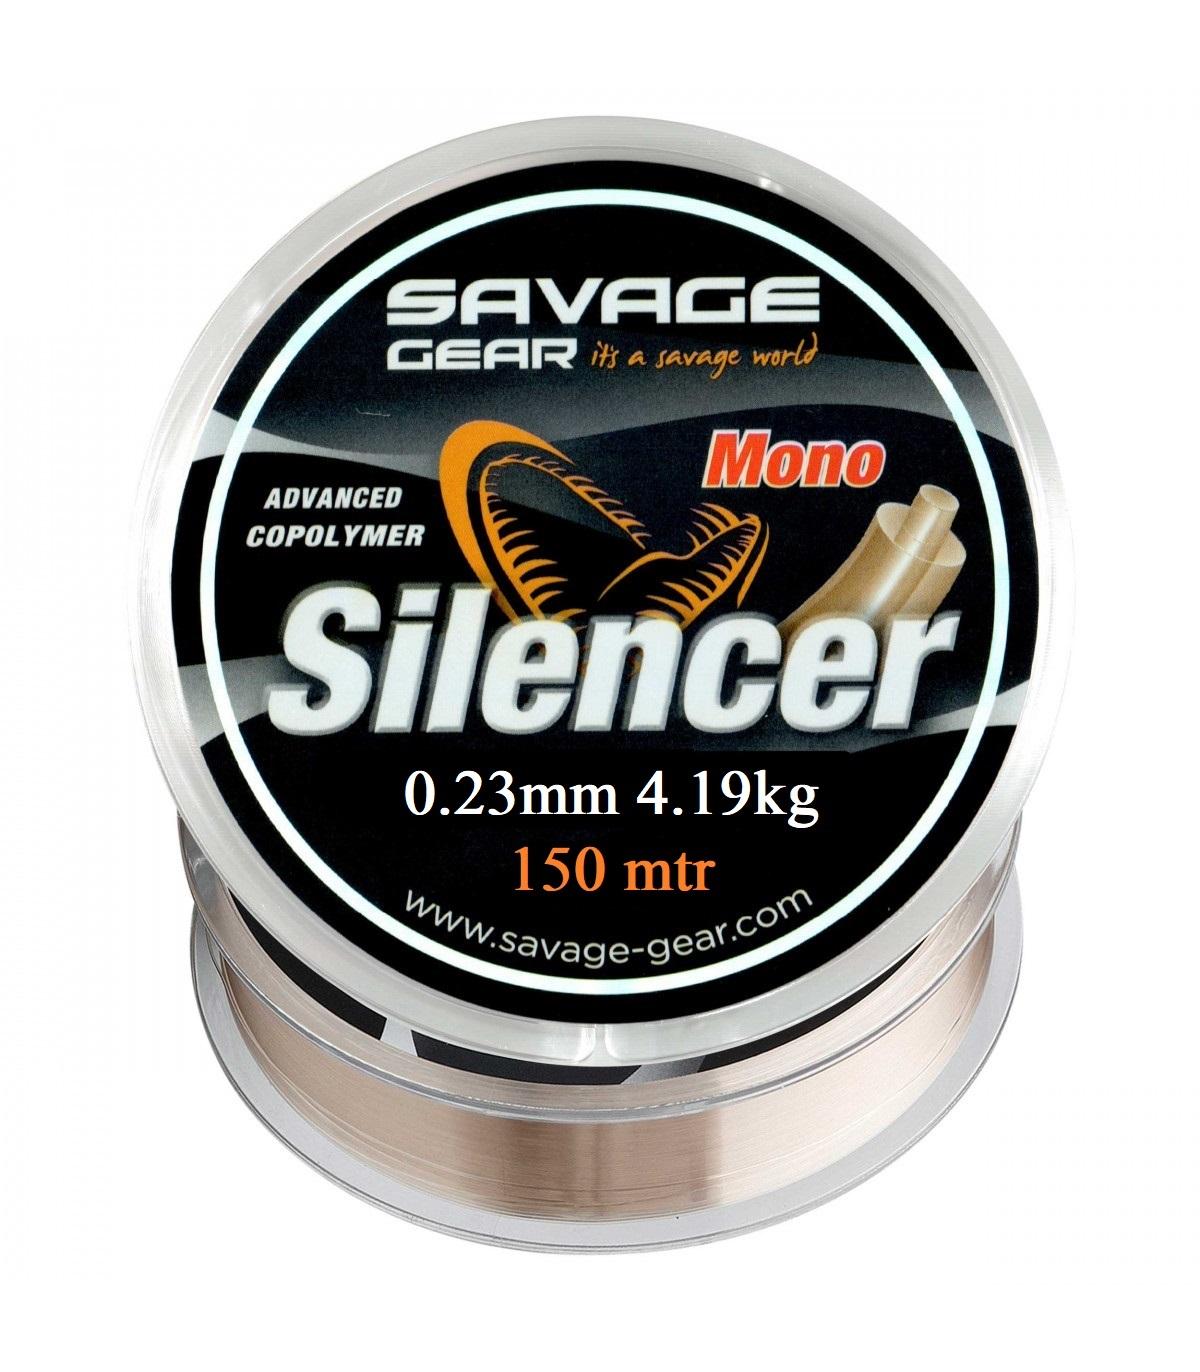 Savage Gear nylon Silencer Mono | 0.35mm 8.97kg >150mtr